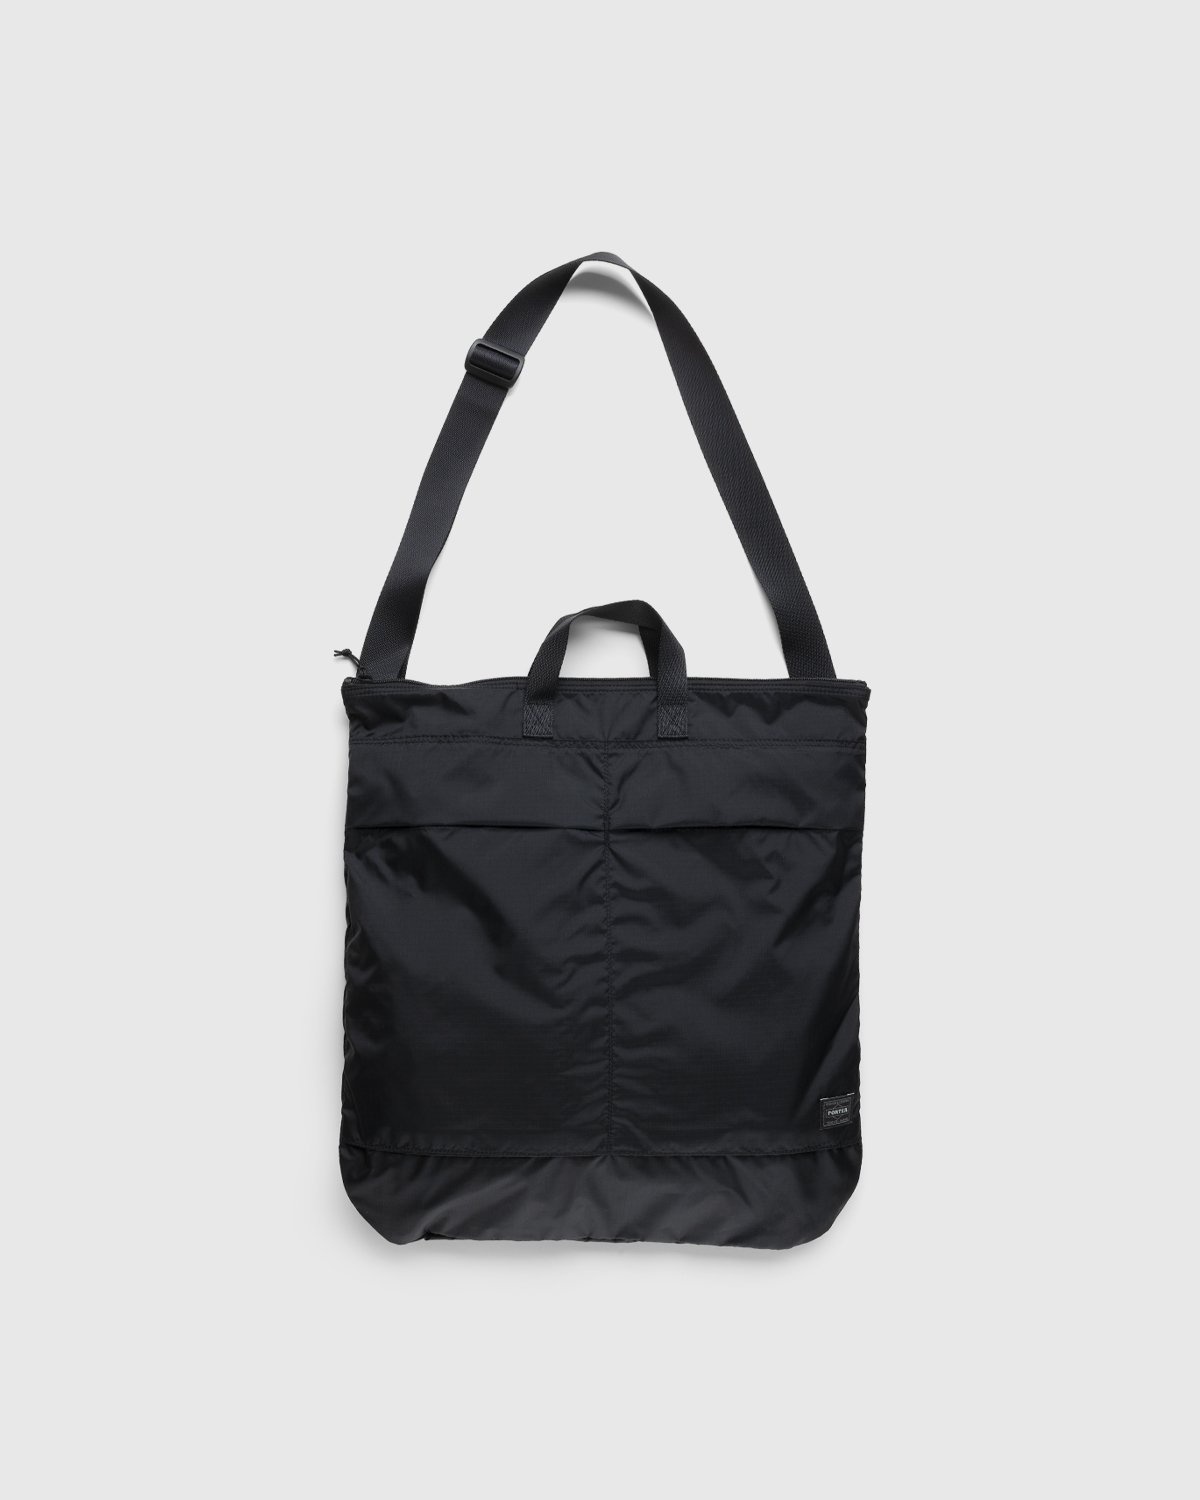 Porter-Yoshida & Co. – Flex 2-Way Helmet Bag Black | Highsnobiety Shop